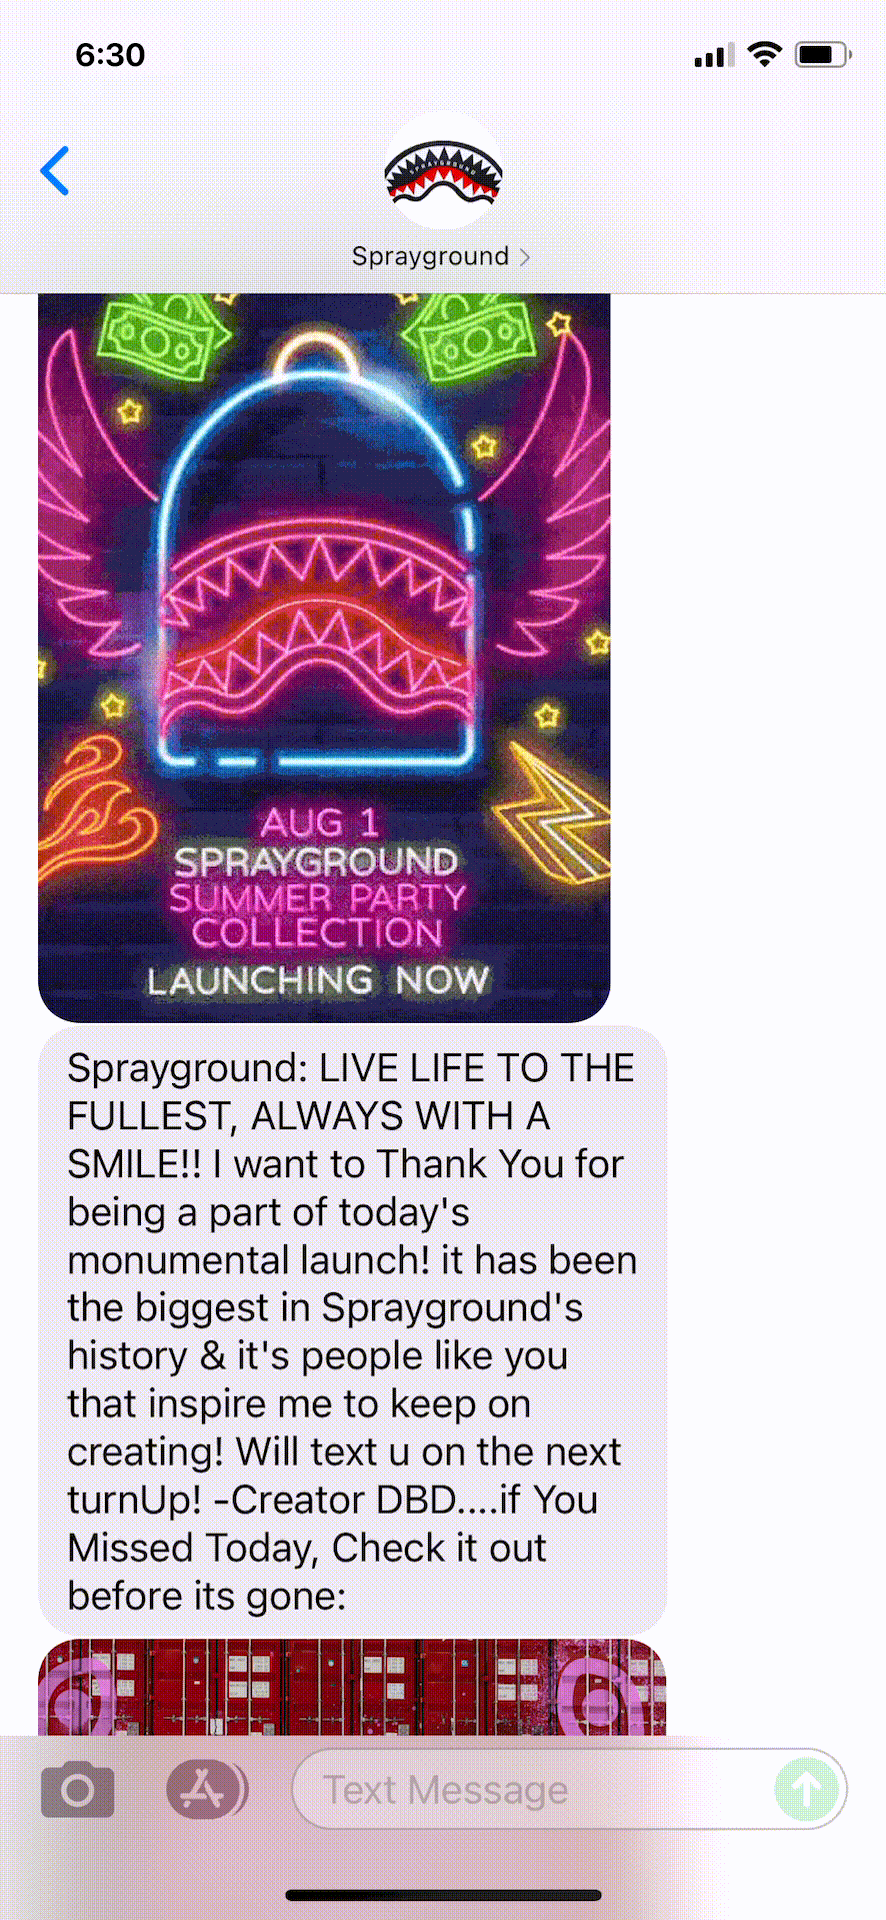 Sprayground-1-Text-Message-Marketing-Example-08.01.2021